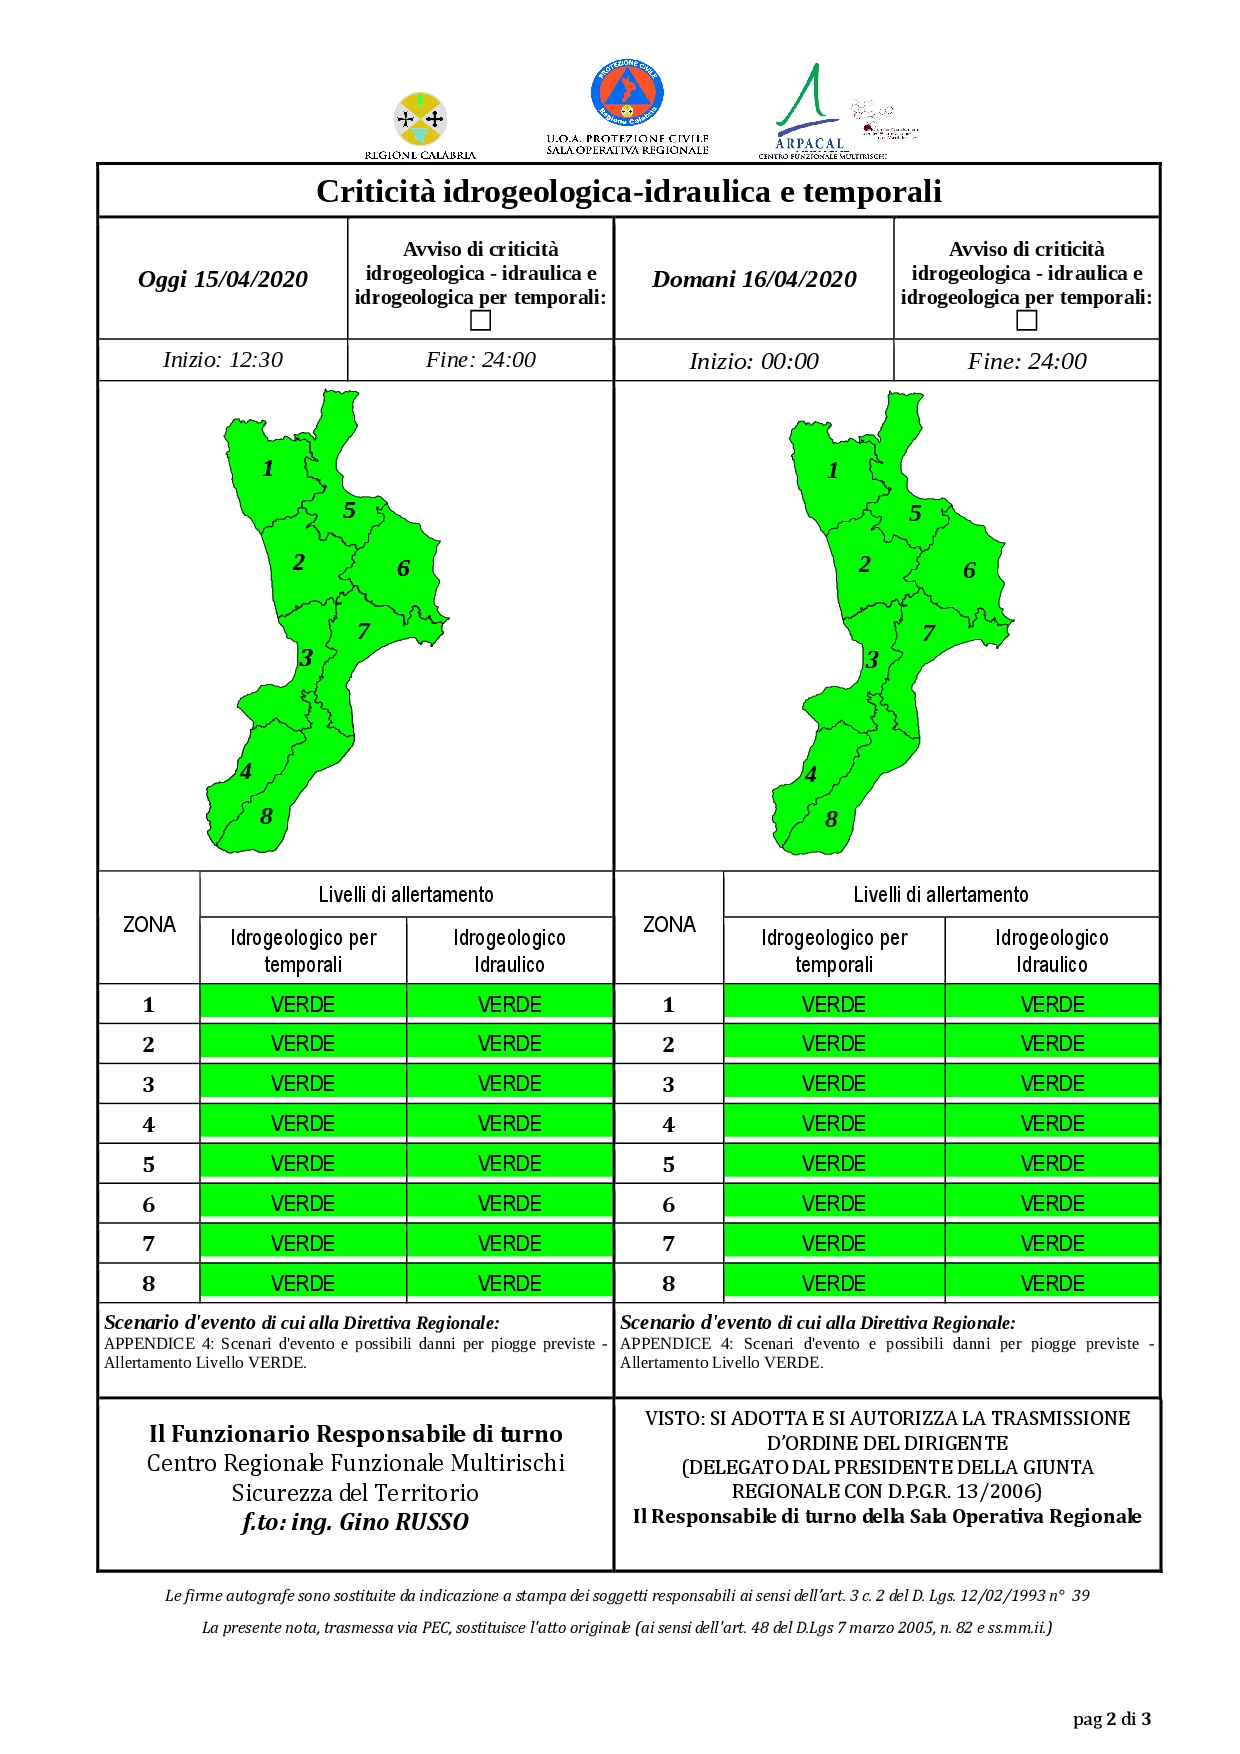 Criticità idrogeologica-idraulica e temporali in Calabria 15-04-2020